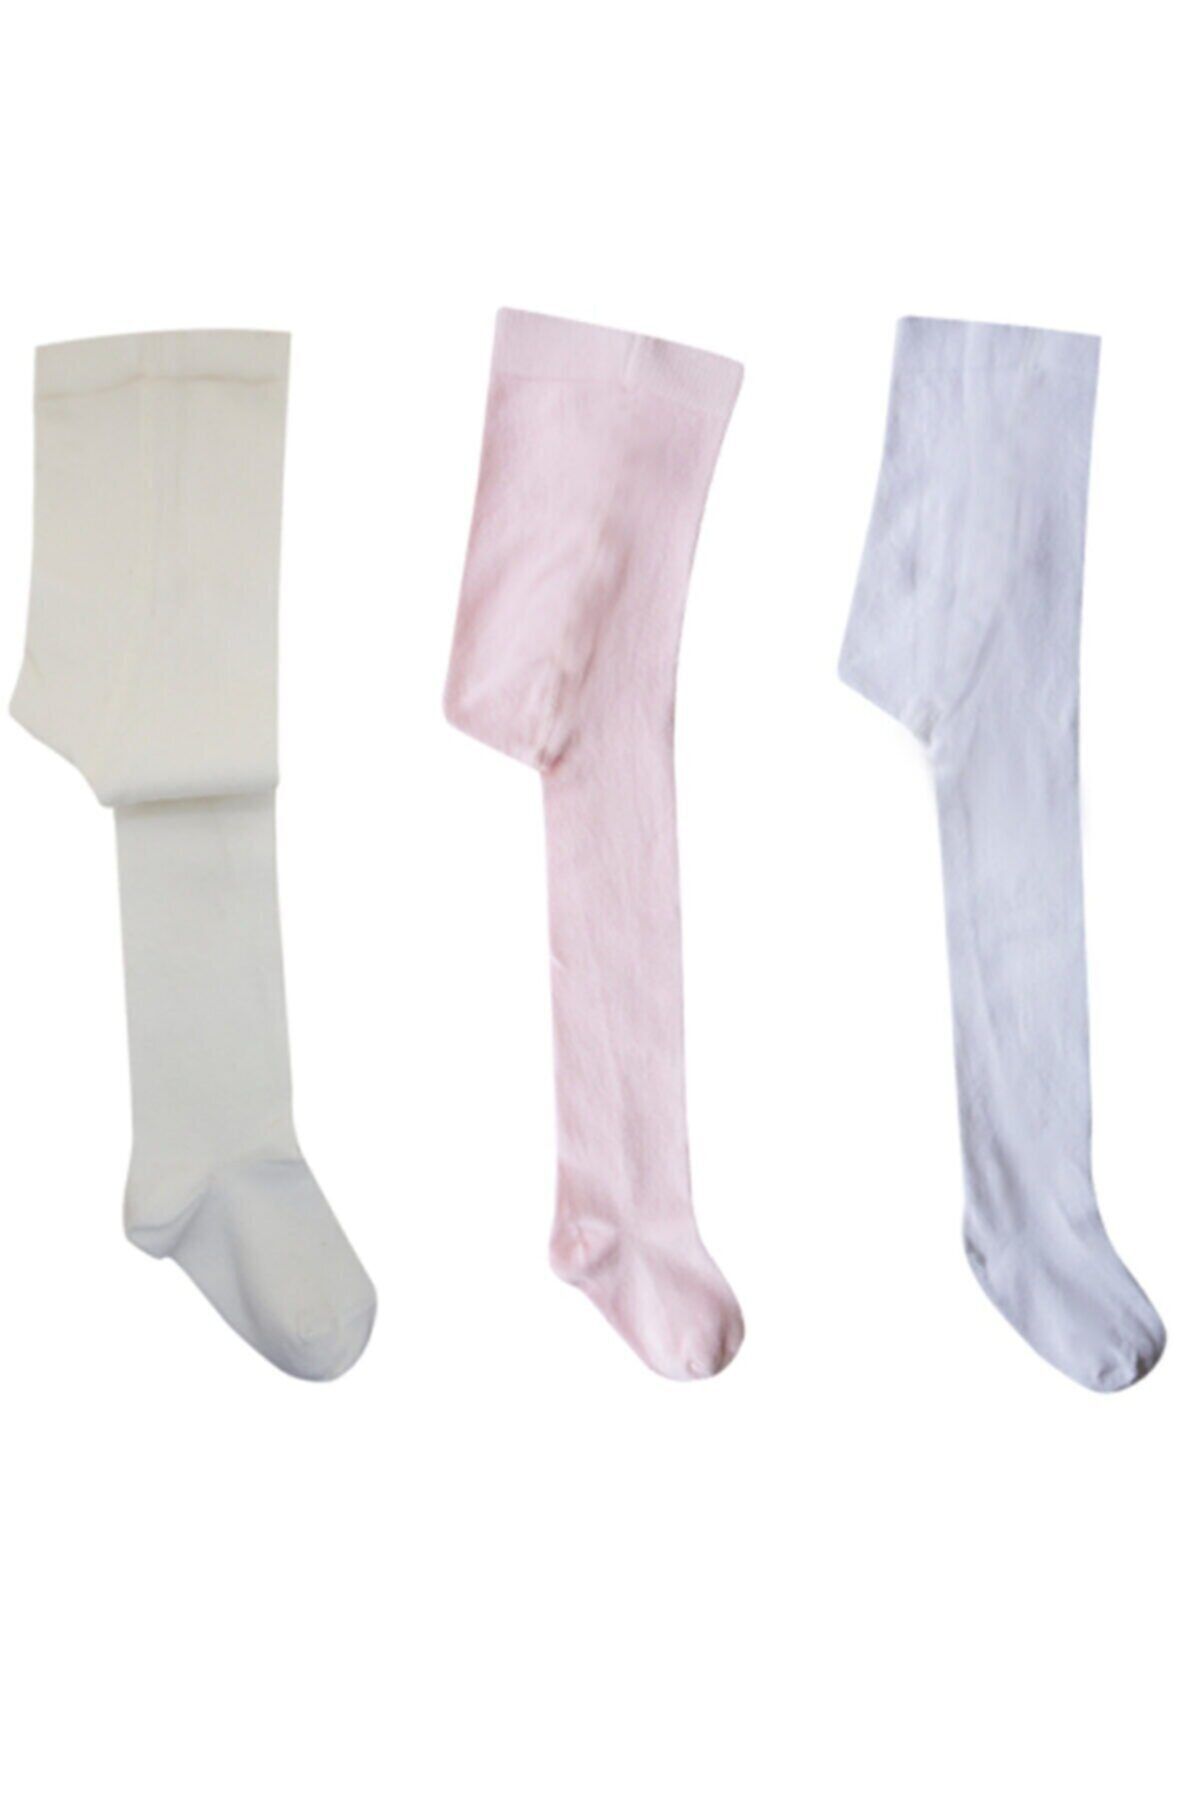 ESES BEBE Ekru Pembe Beyaz Pamuklu 3lü Külotlu Çorap